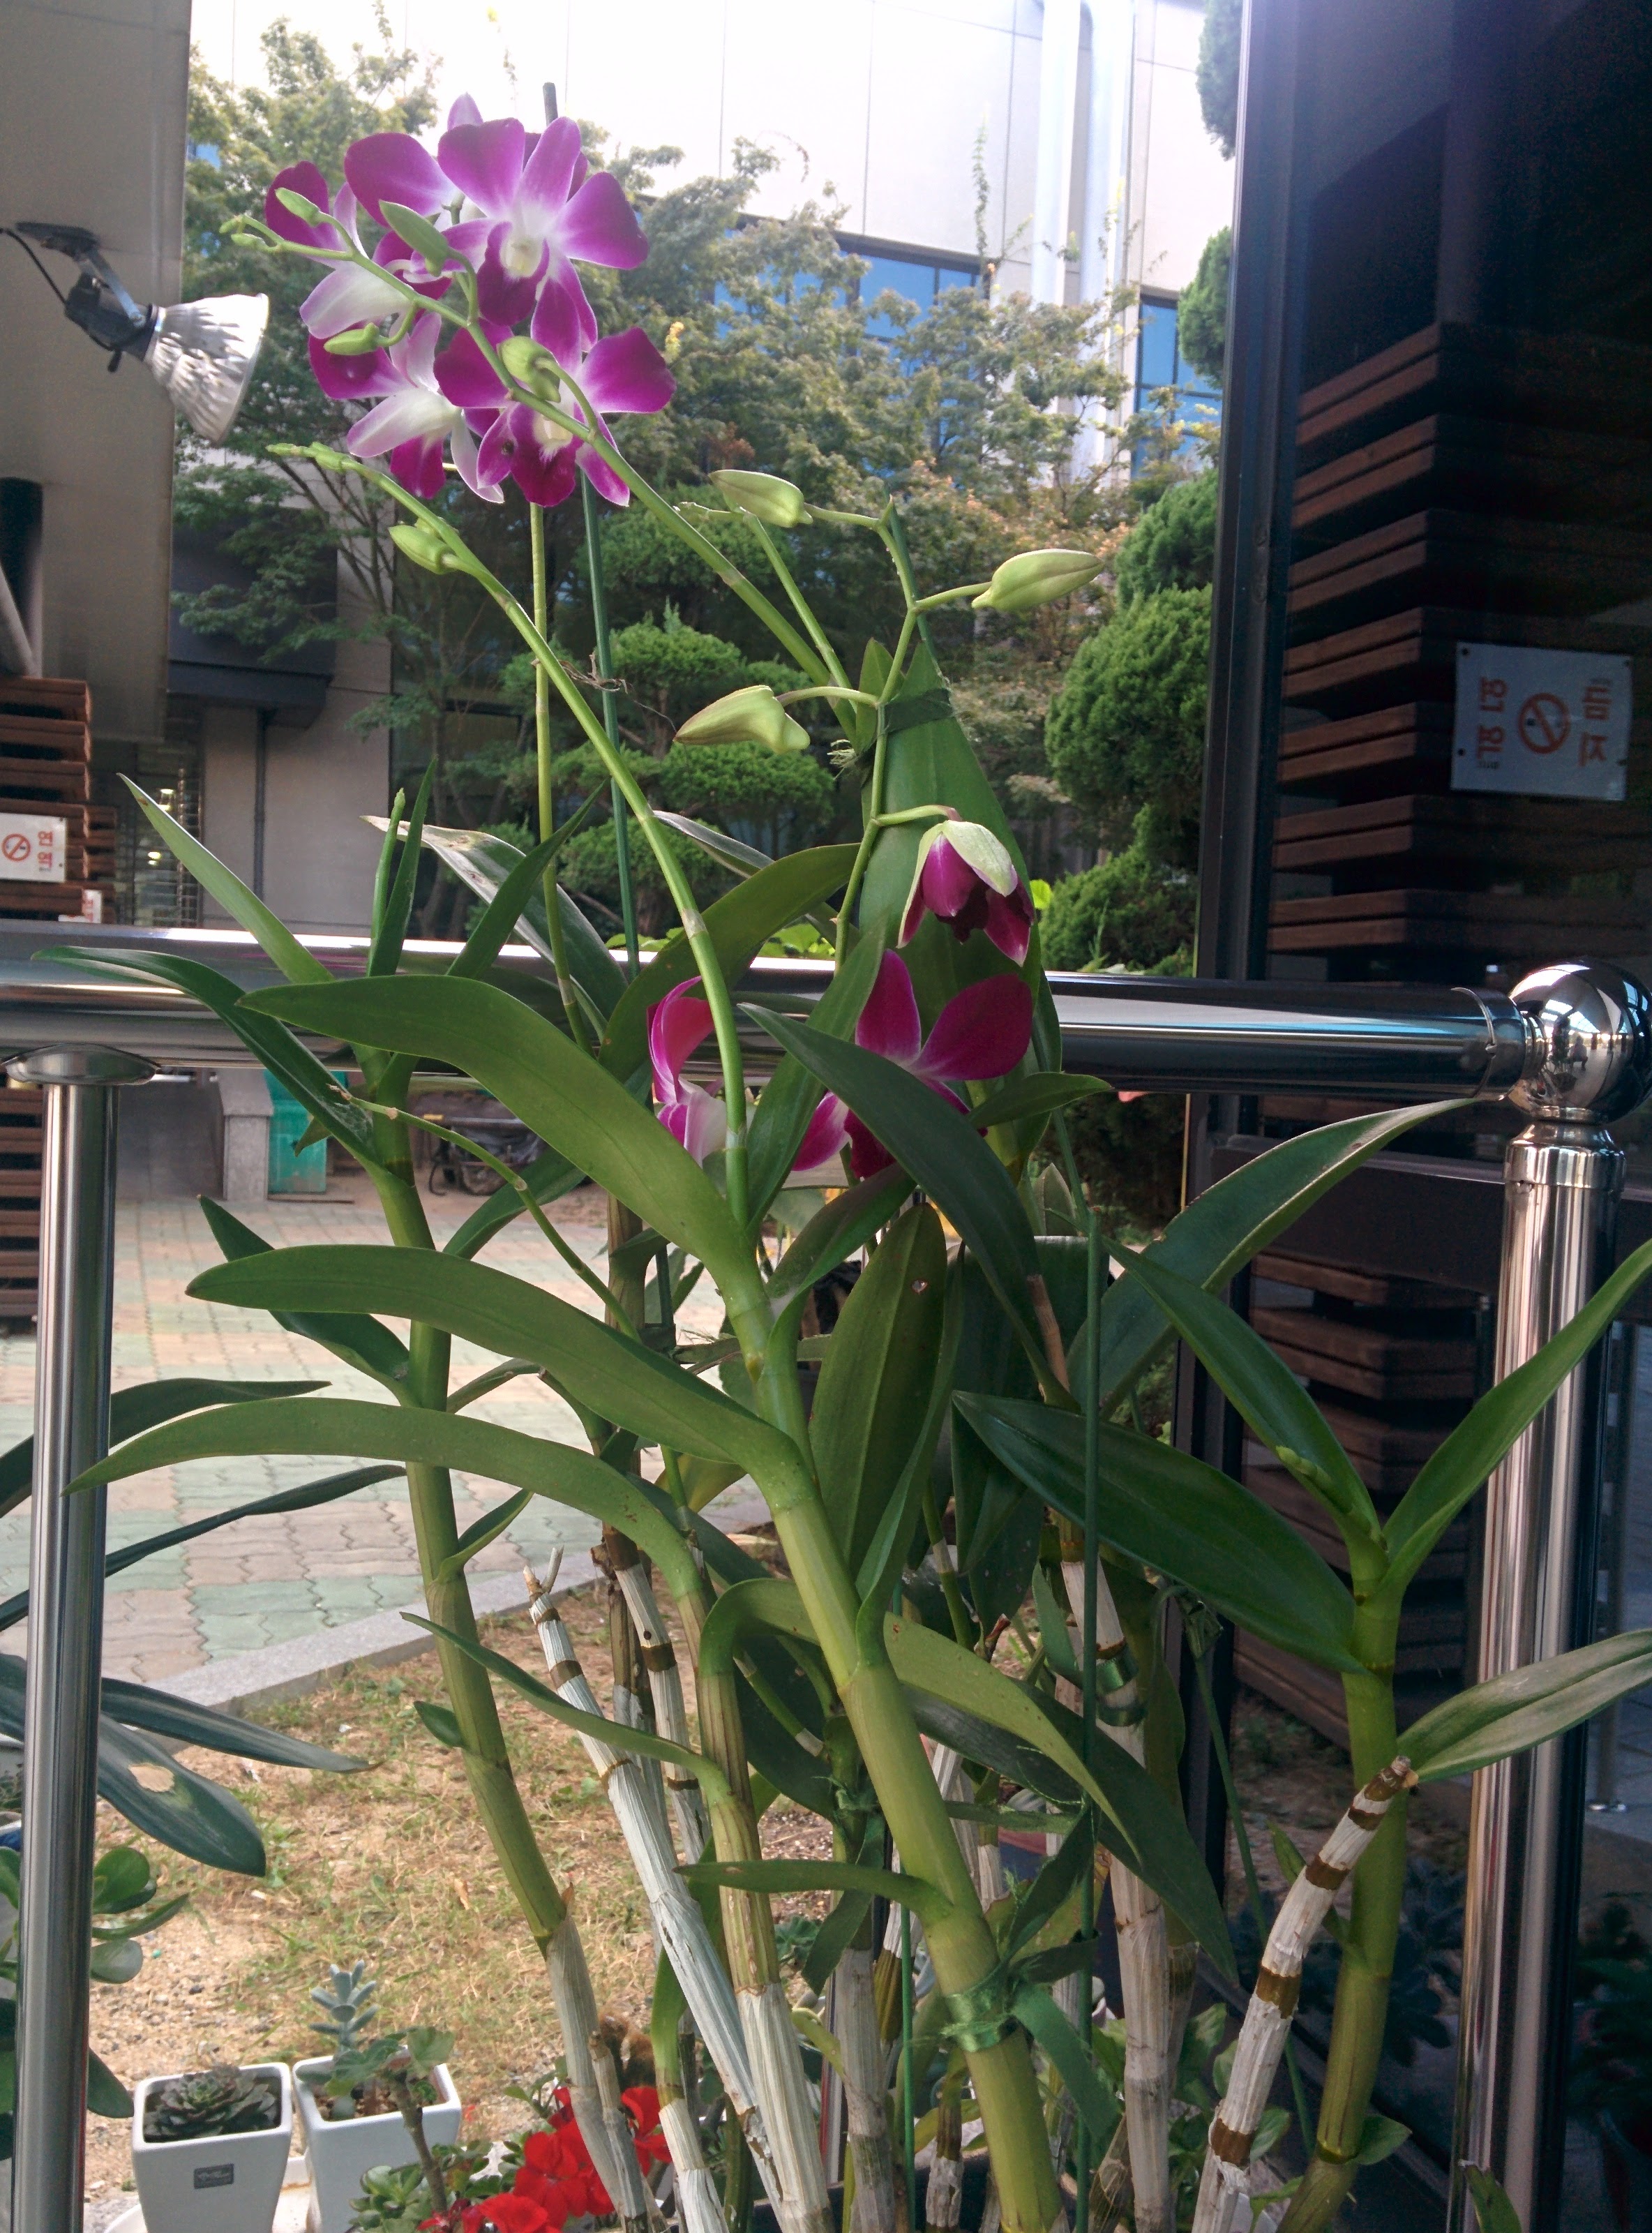 IMG_20150925_175050.jpg 자주색 꽃을 피운 난초, 석곡란(石斛蘭)